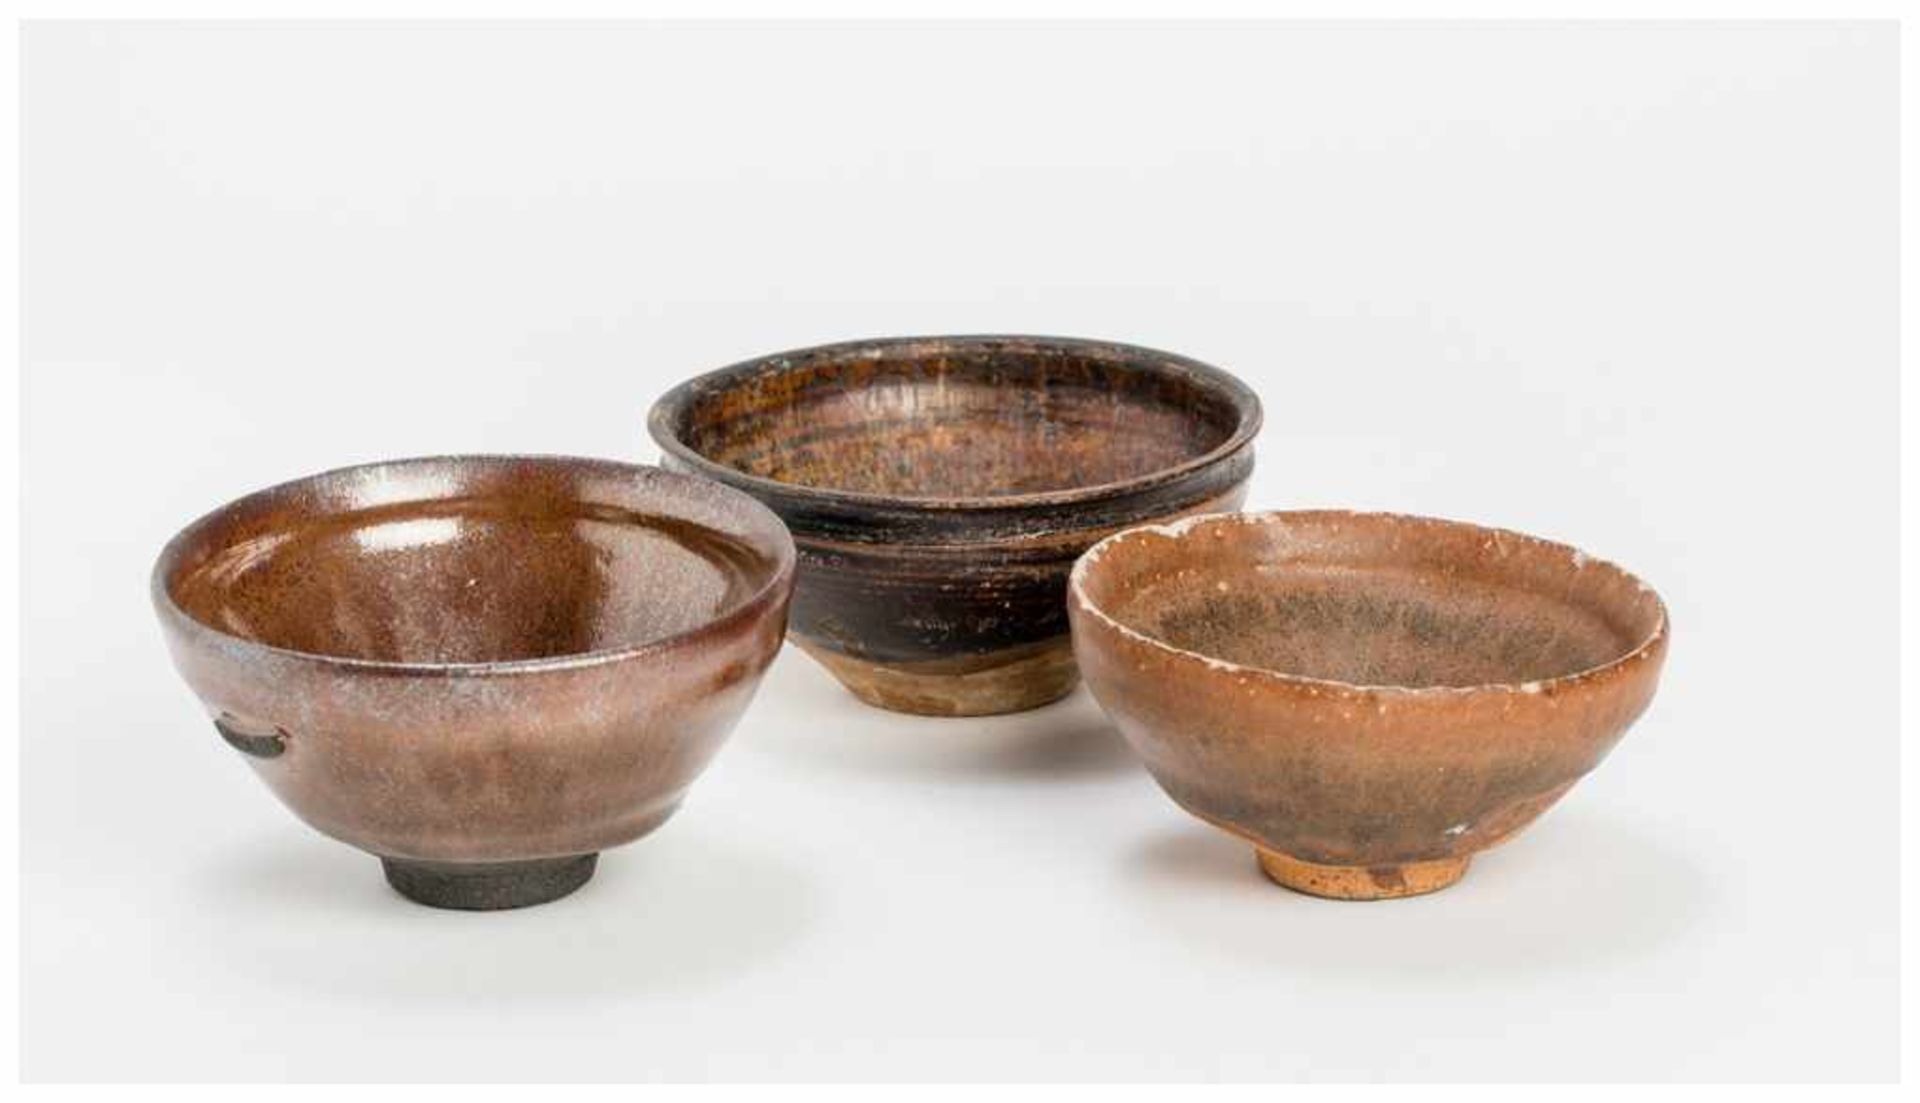 THREE CHINESE GLAZED CERAMIC DRINKING BOWLS Glazed ceramic. China, Song to Yuan dynastyThese